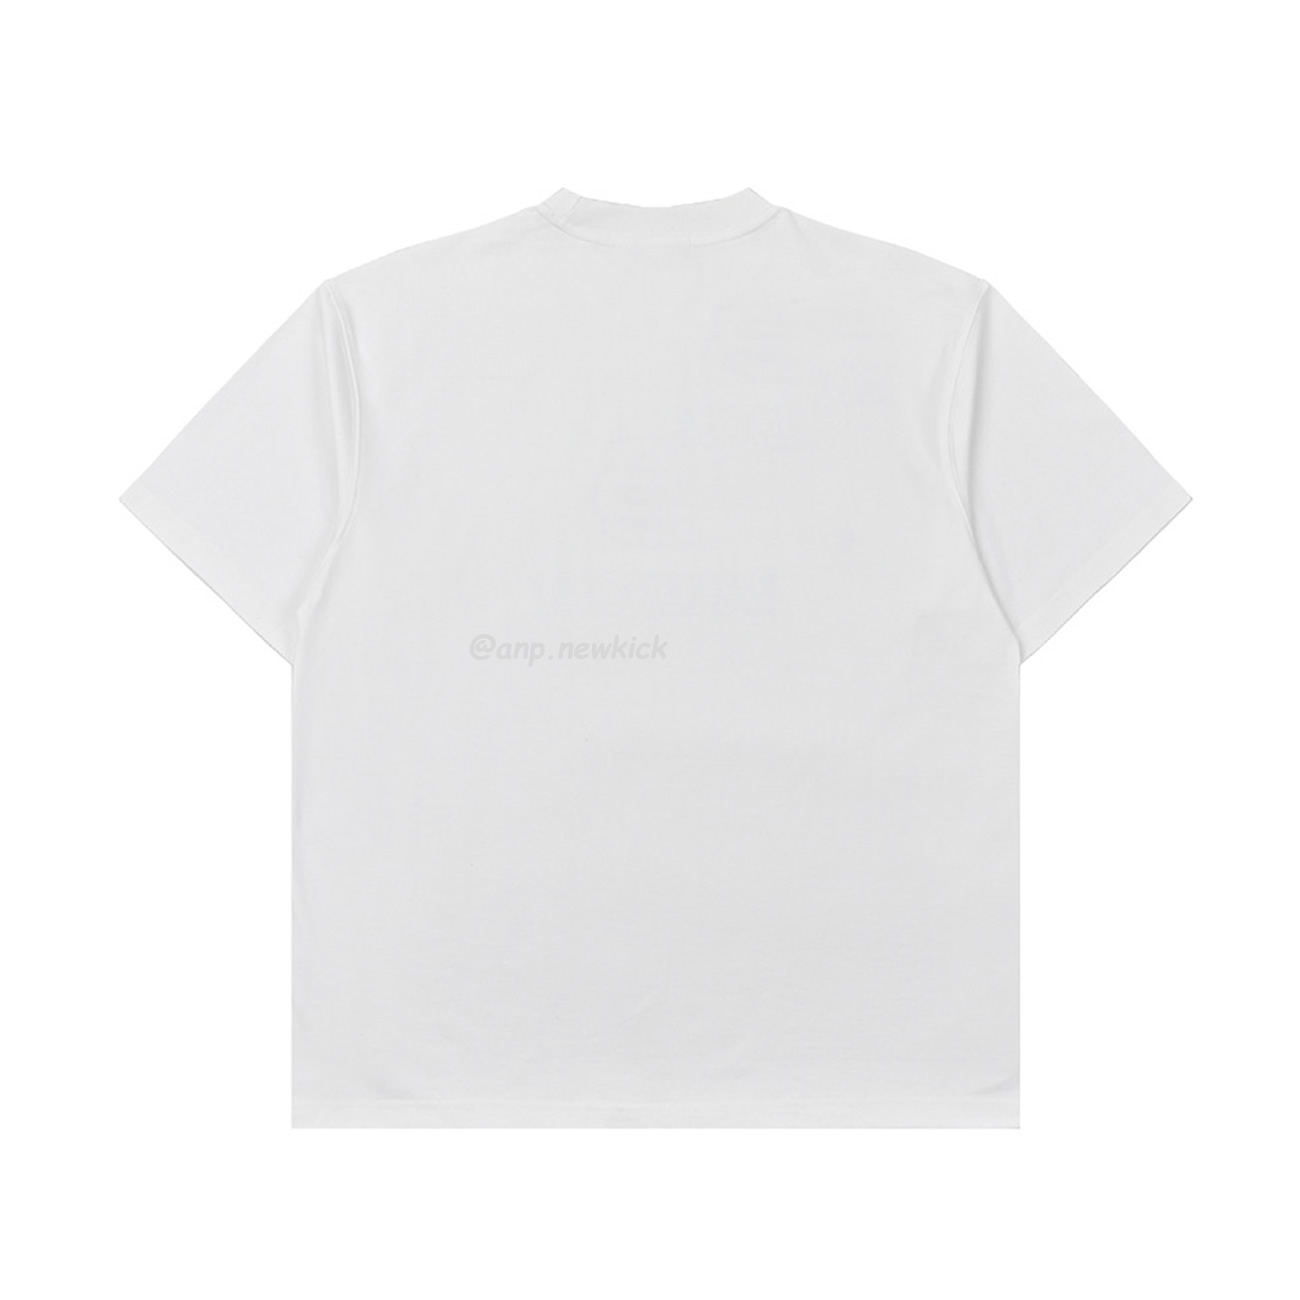 Welldone Letter Printing Black White T Shirt (9) - newkick.org